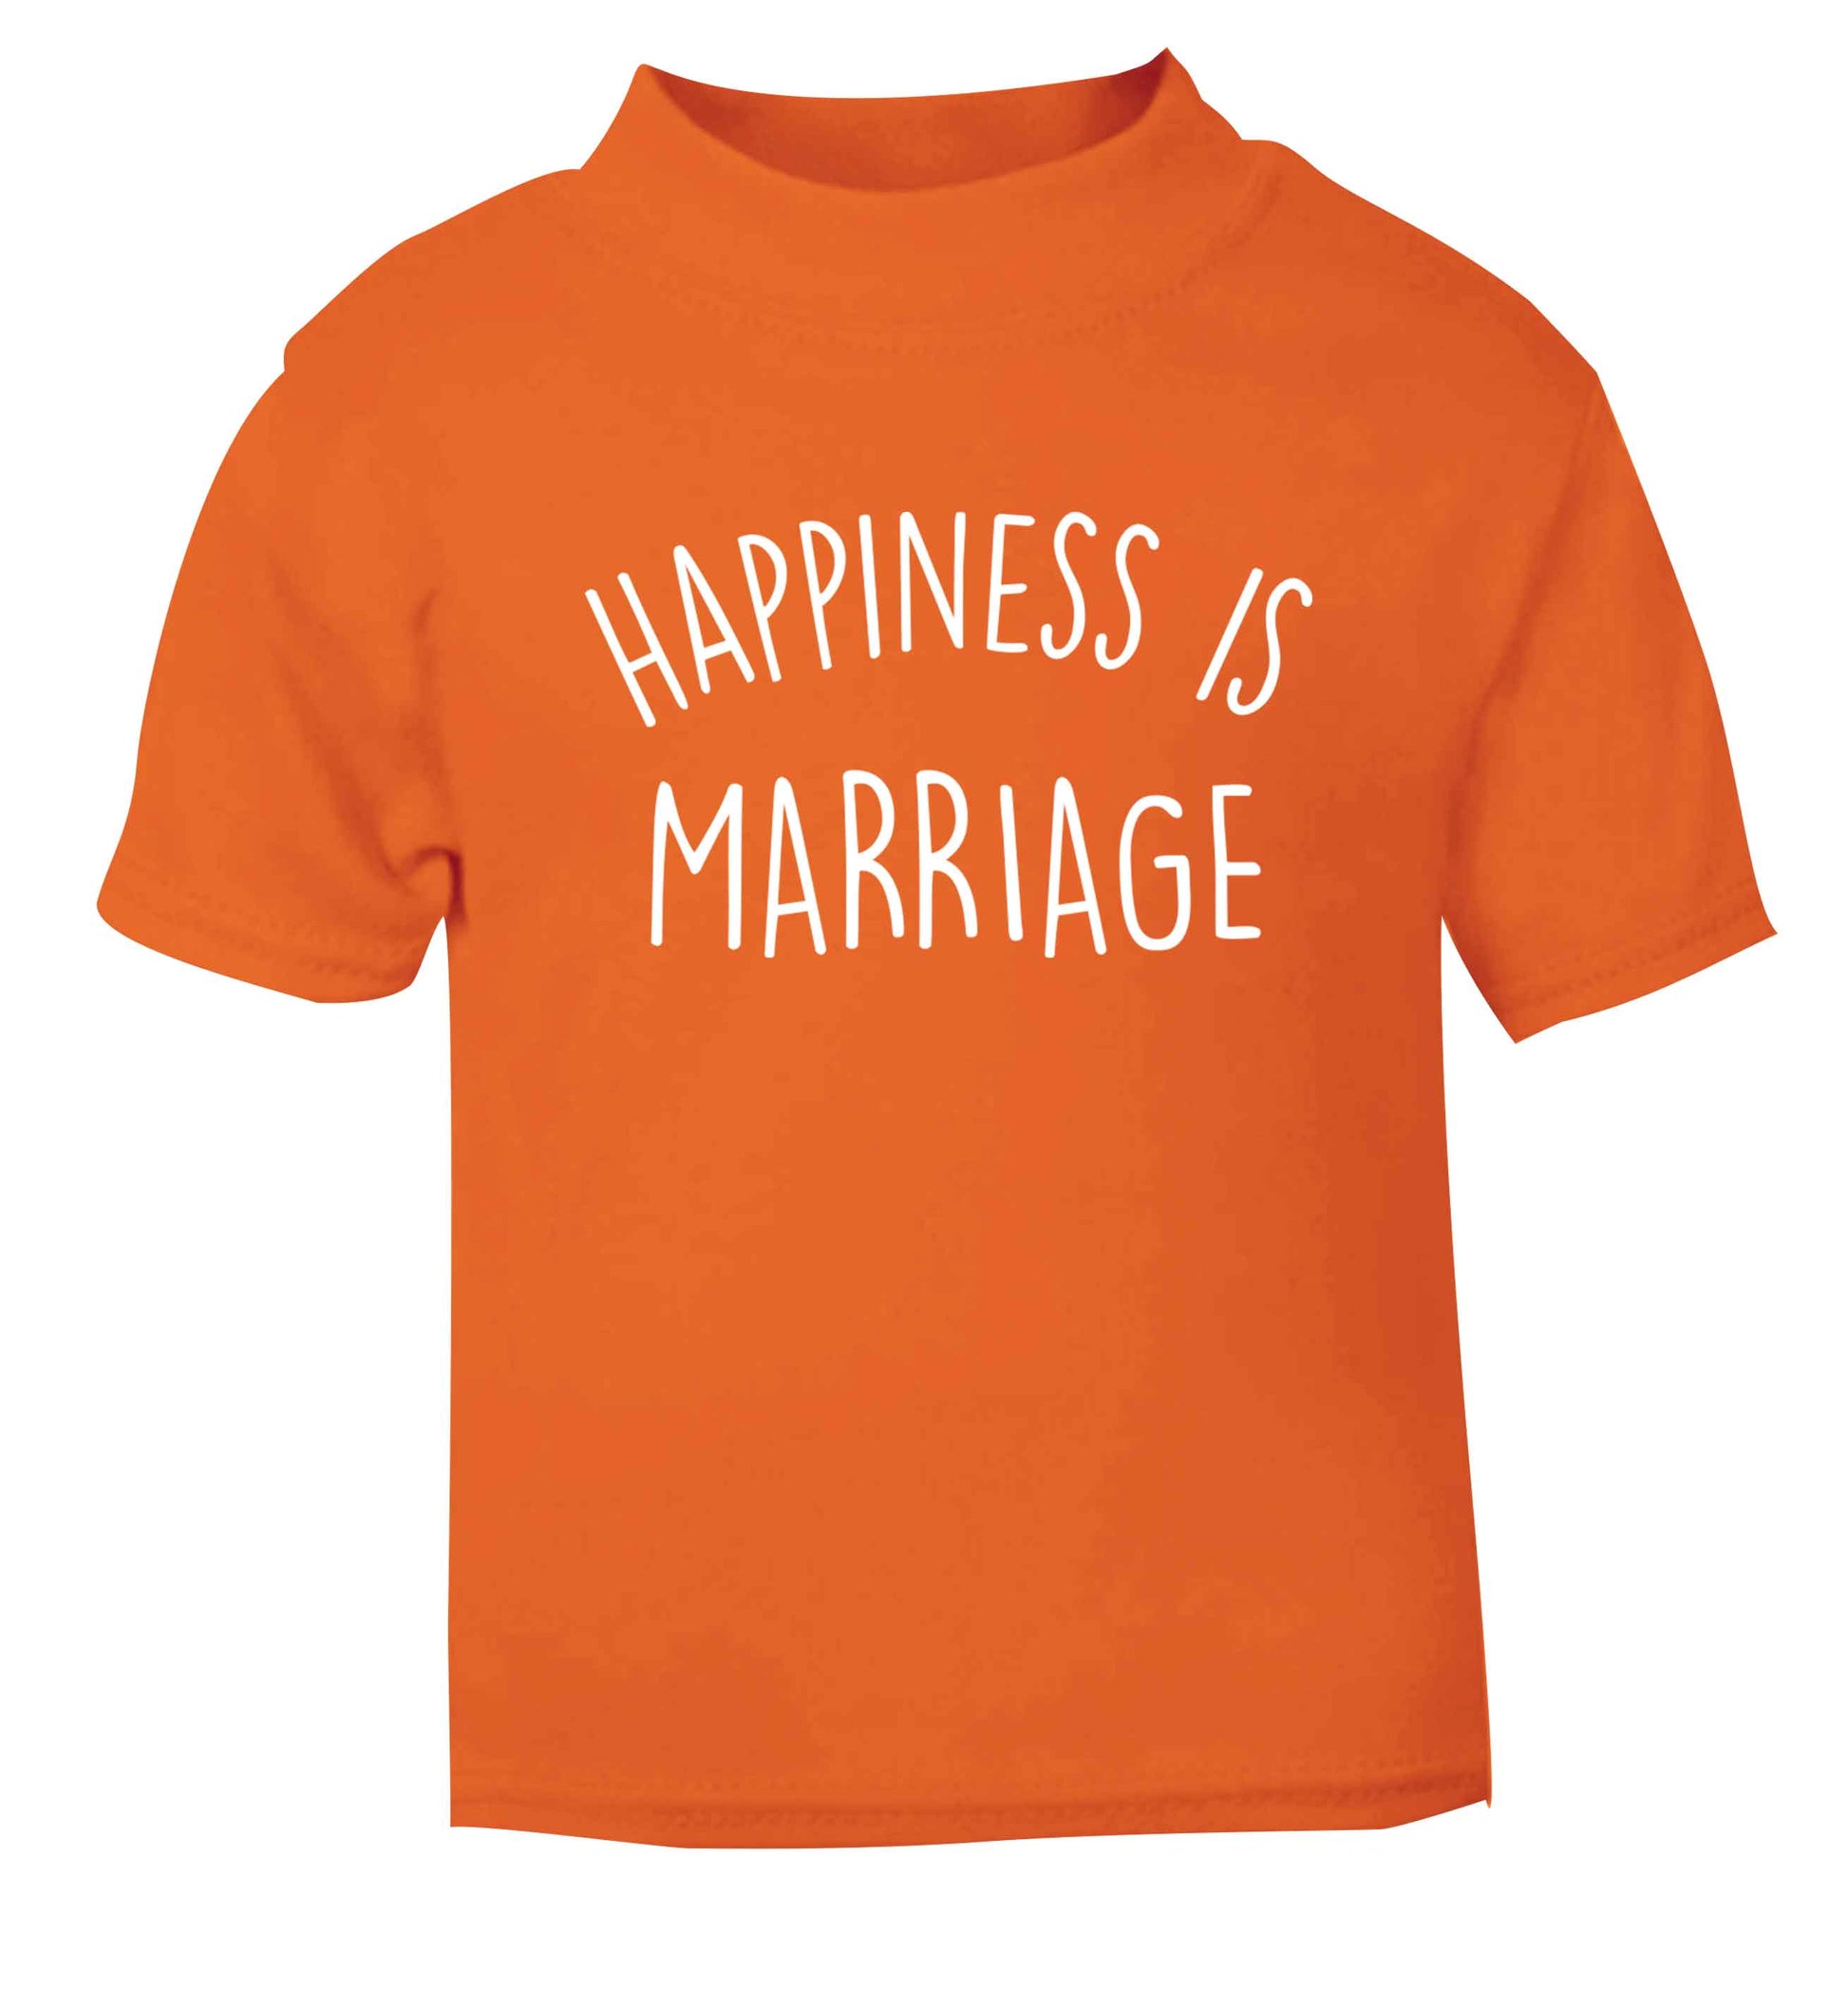 Happiness is wedding planning orange baby toddler Tshirt 2 Years